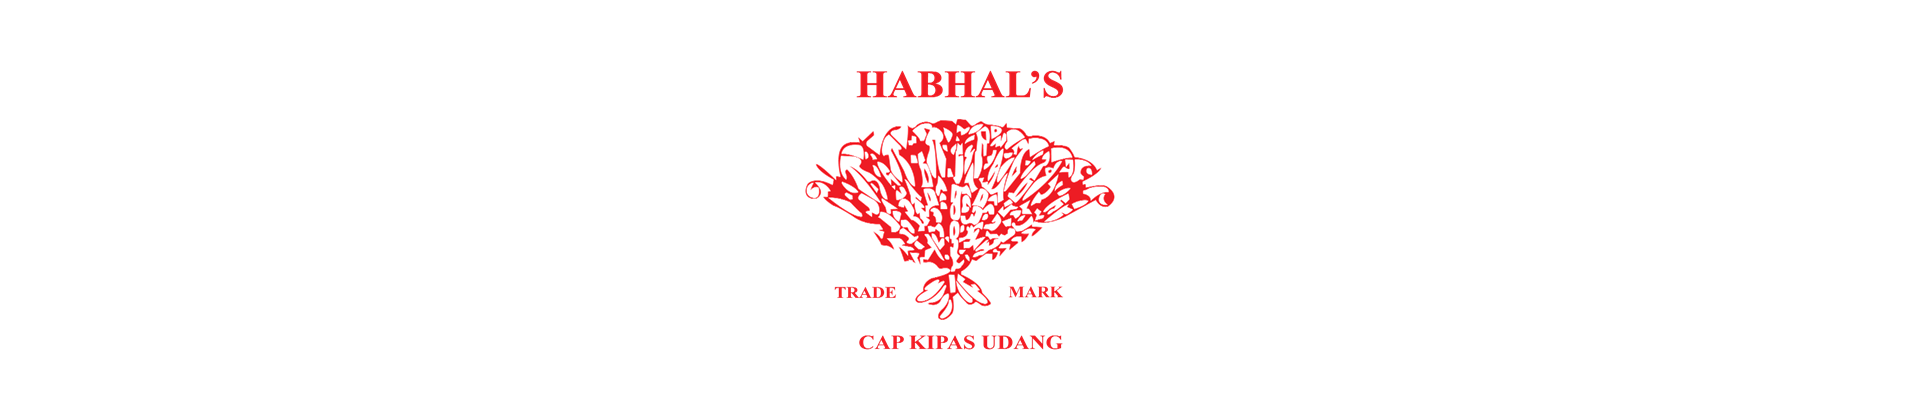 Categories - Habhal's brand